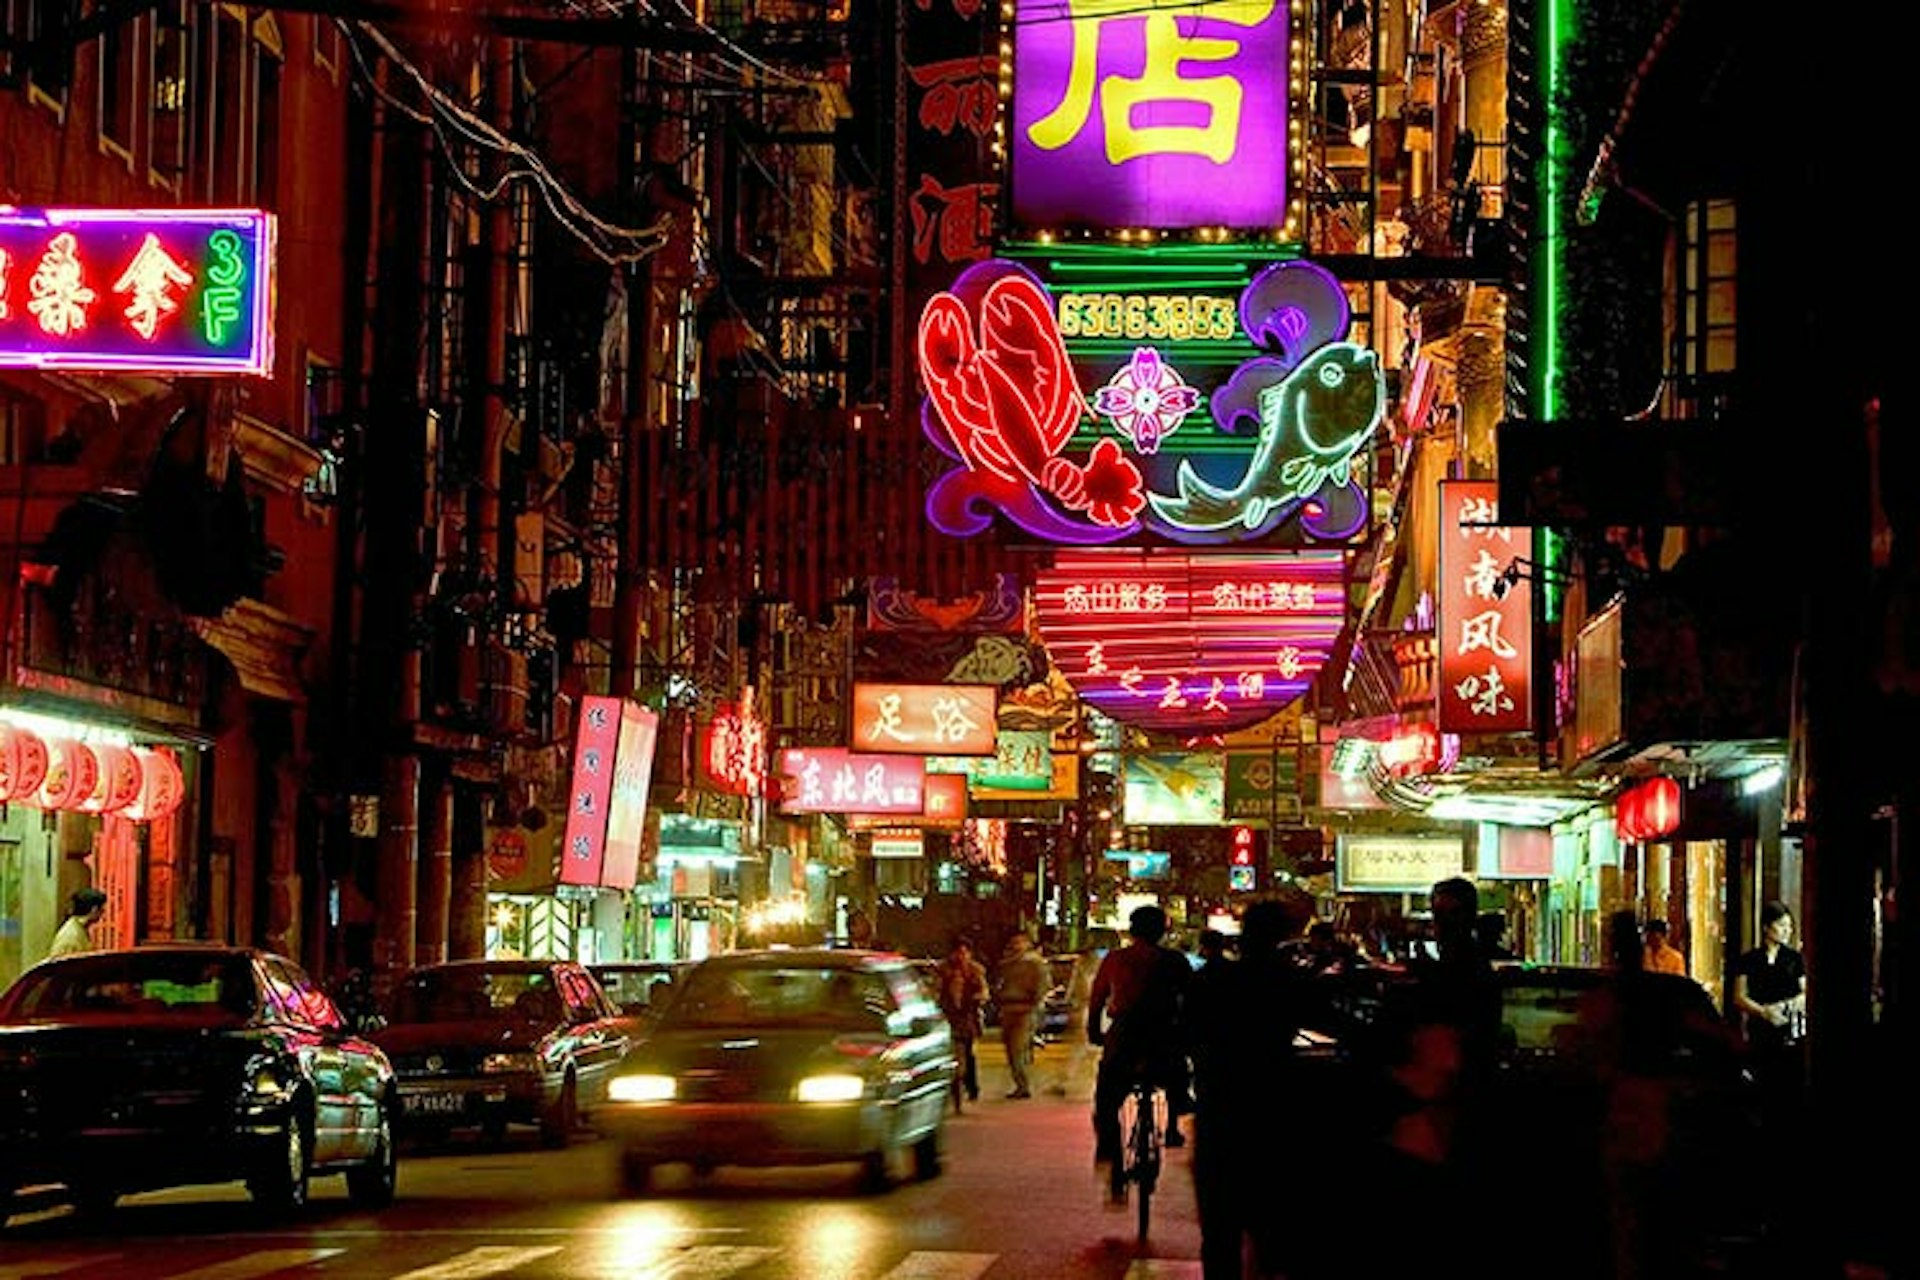 Restaurants, shops and massage parlours line the neon lanes of Shanghai's Hongkou quarter. Image by Karl Johaentges / Getty Images